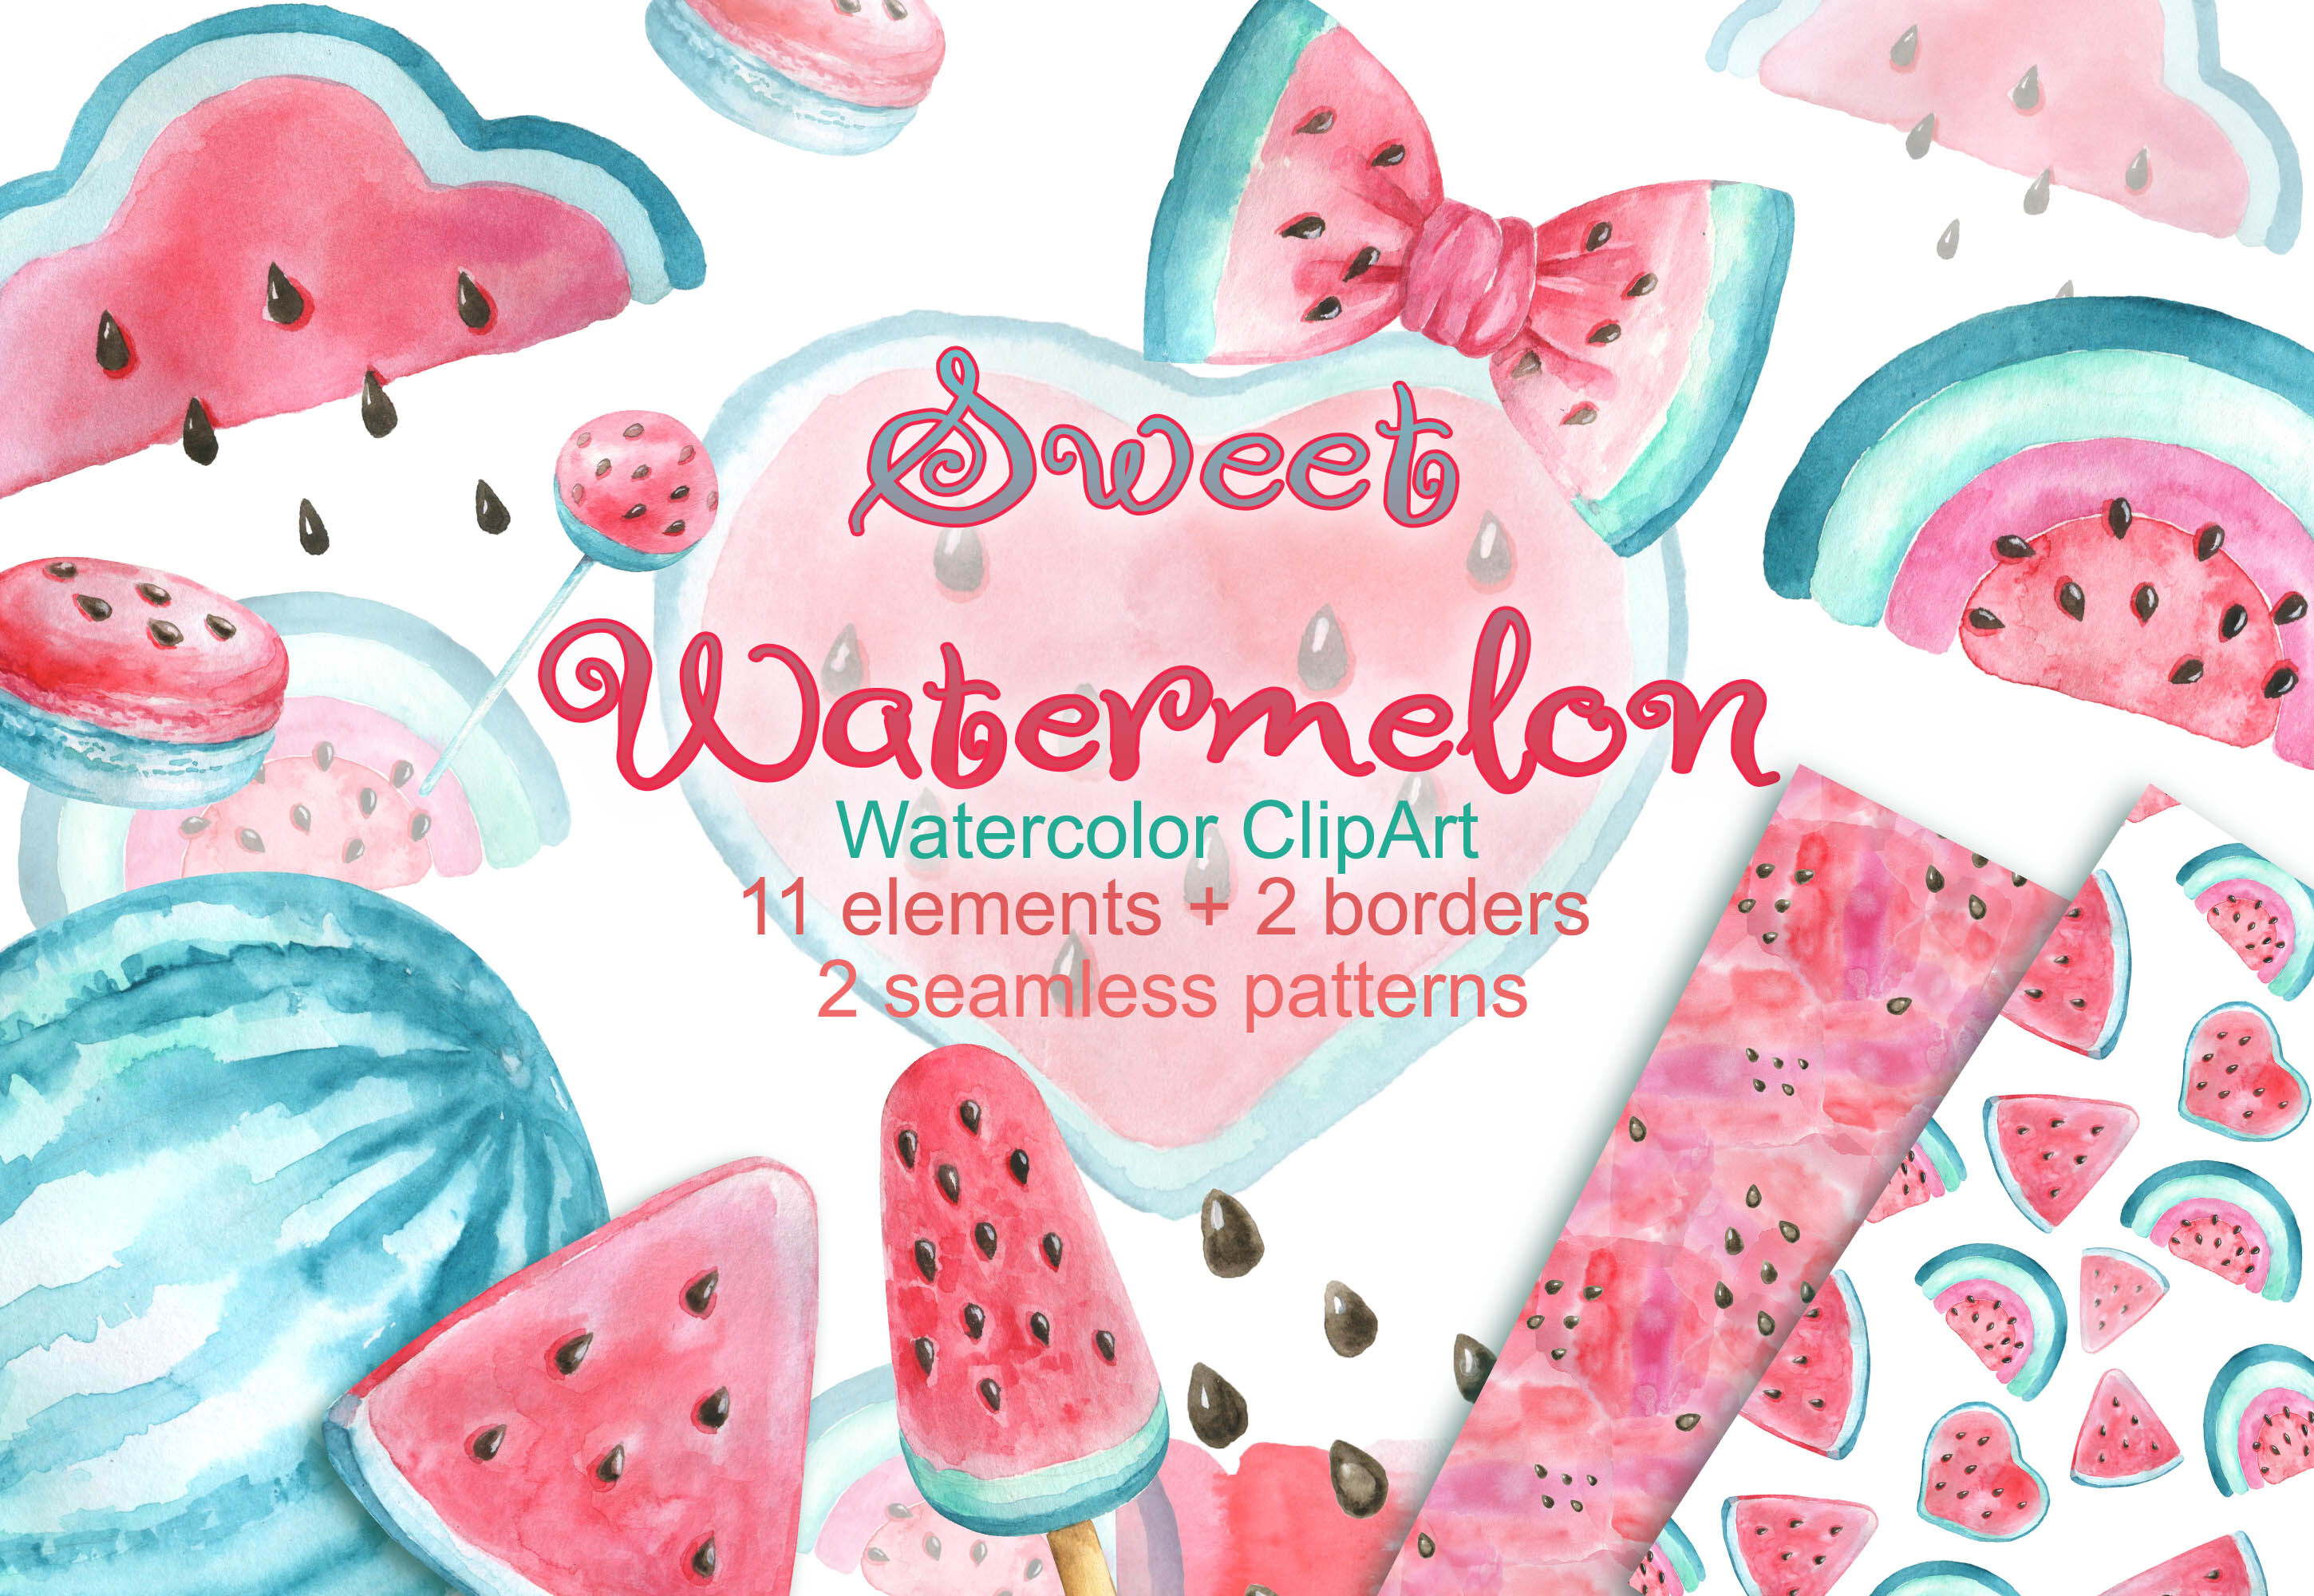 Watercolor Watermelon Clipart Baby Shower Birthday Pattern Invitation By Vilenaart Thehungryjpeg Com